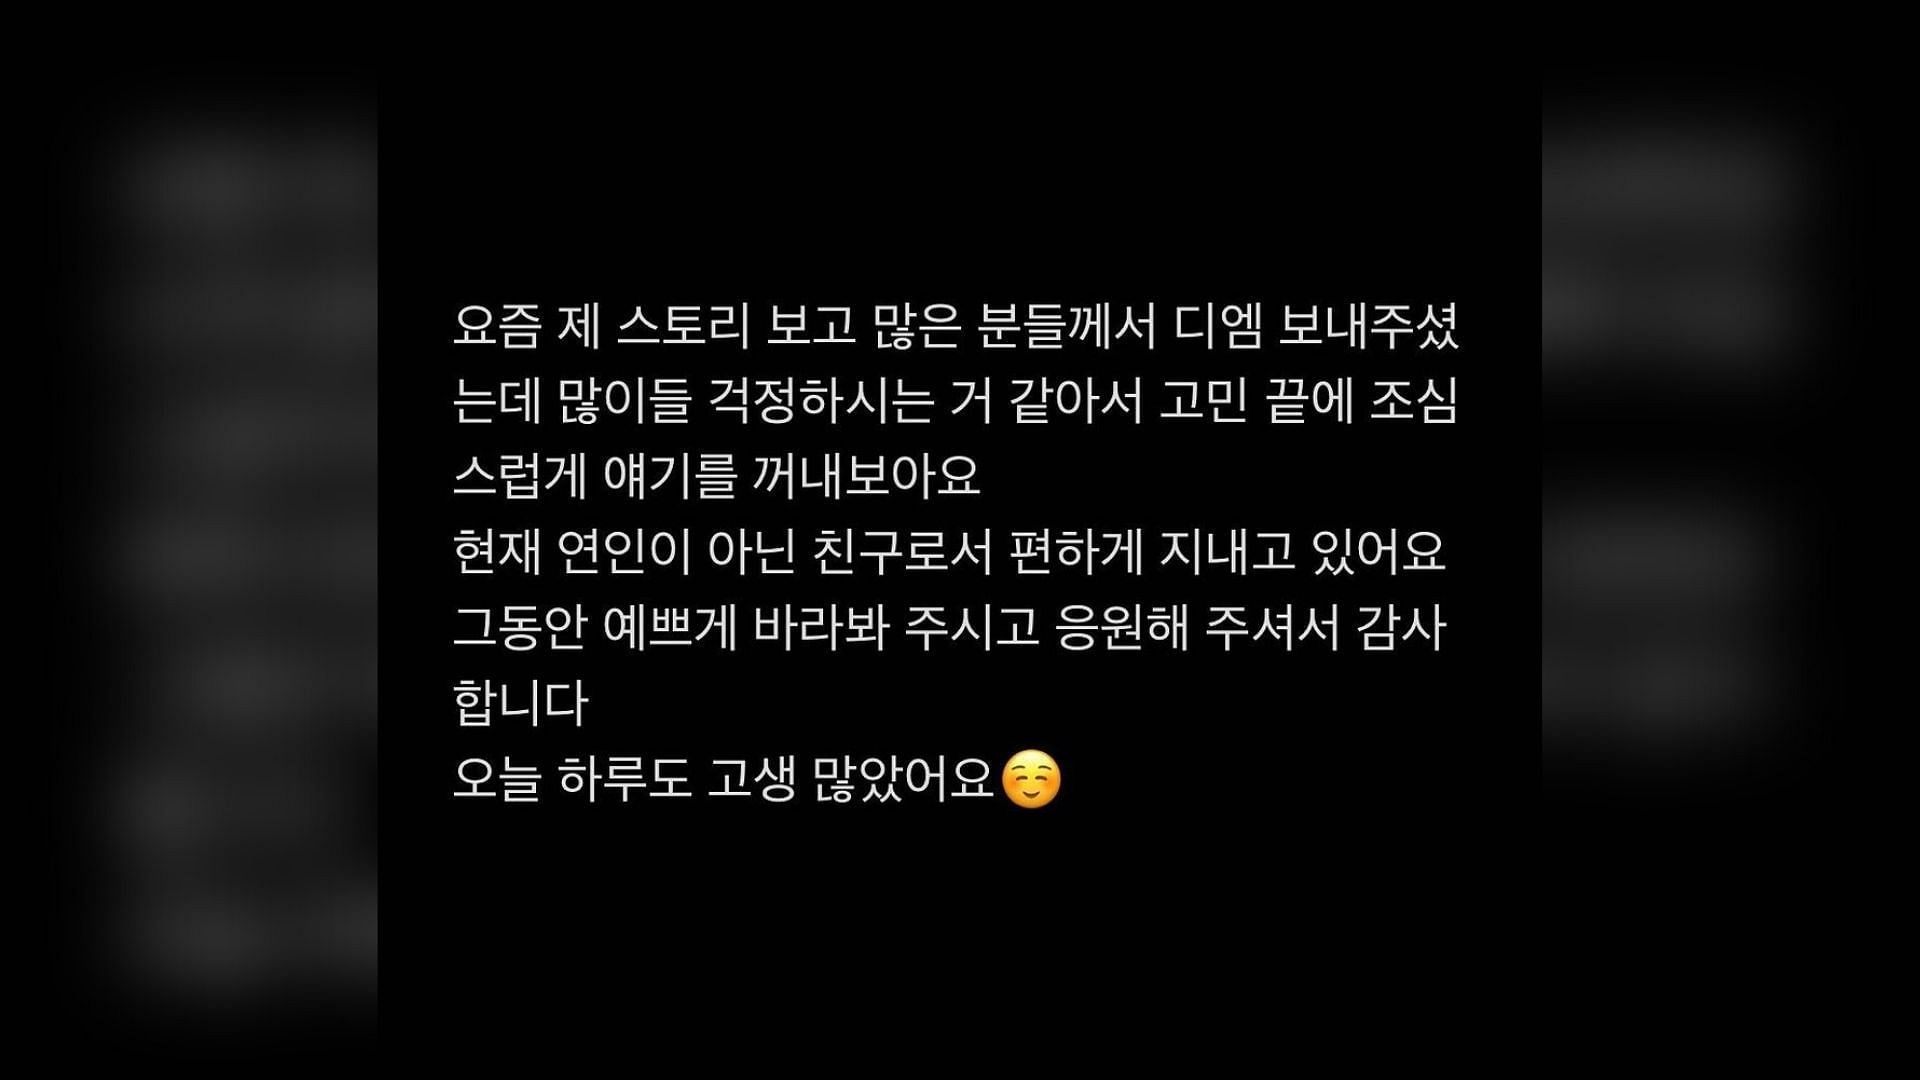 Model Jeon Sun-hye shares a note announcing the breakup (Image via @sunhye_j/Instagram)